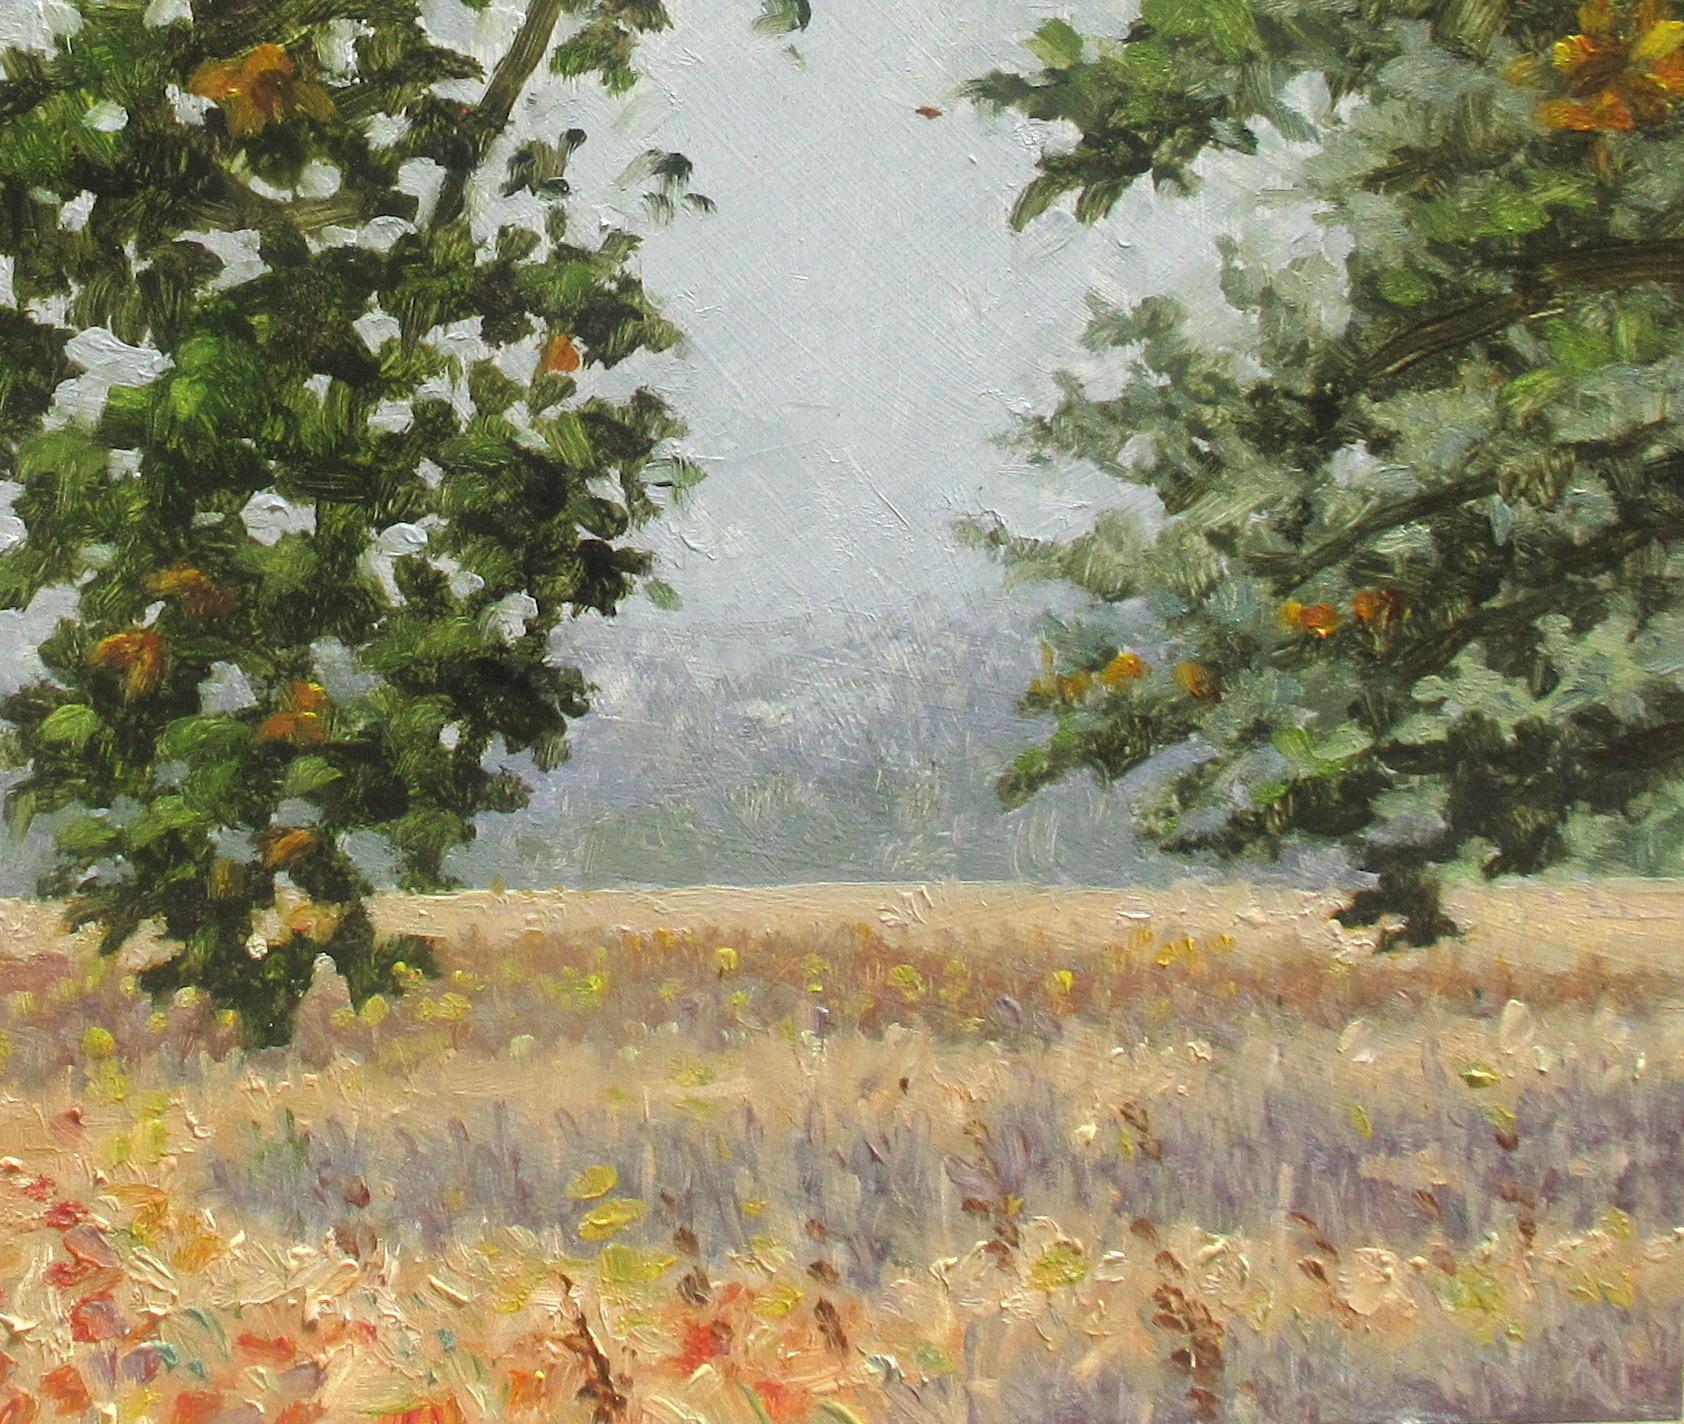 Field Painting September 22 2020, Botanical, Green Tree, Golden Grass, Autumn For Sale 4